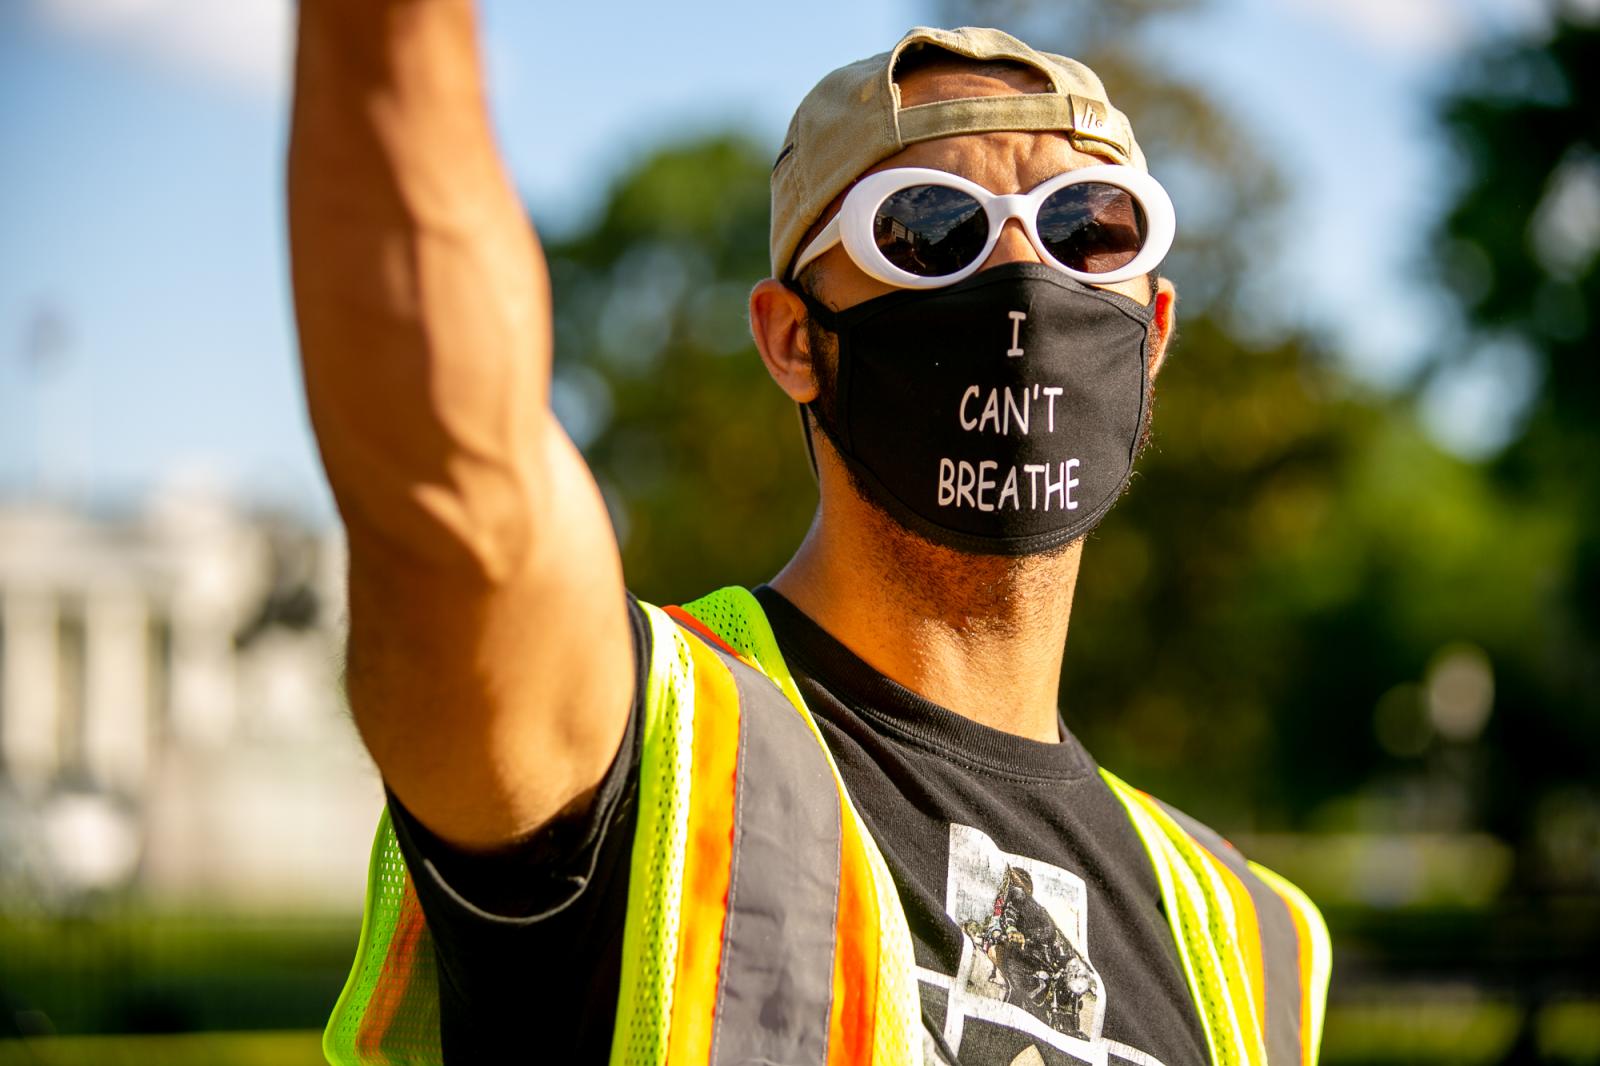 "I can't breathe" - George Floyd Protests, Washington, DC